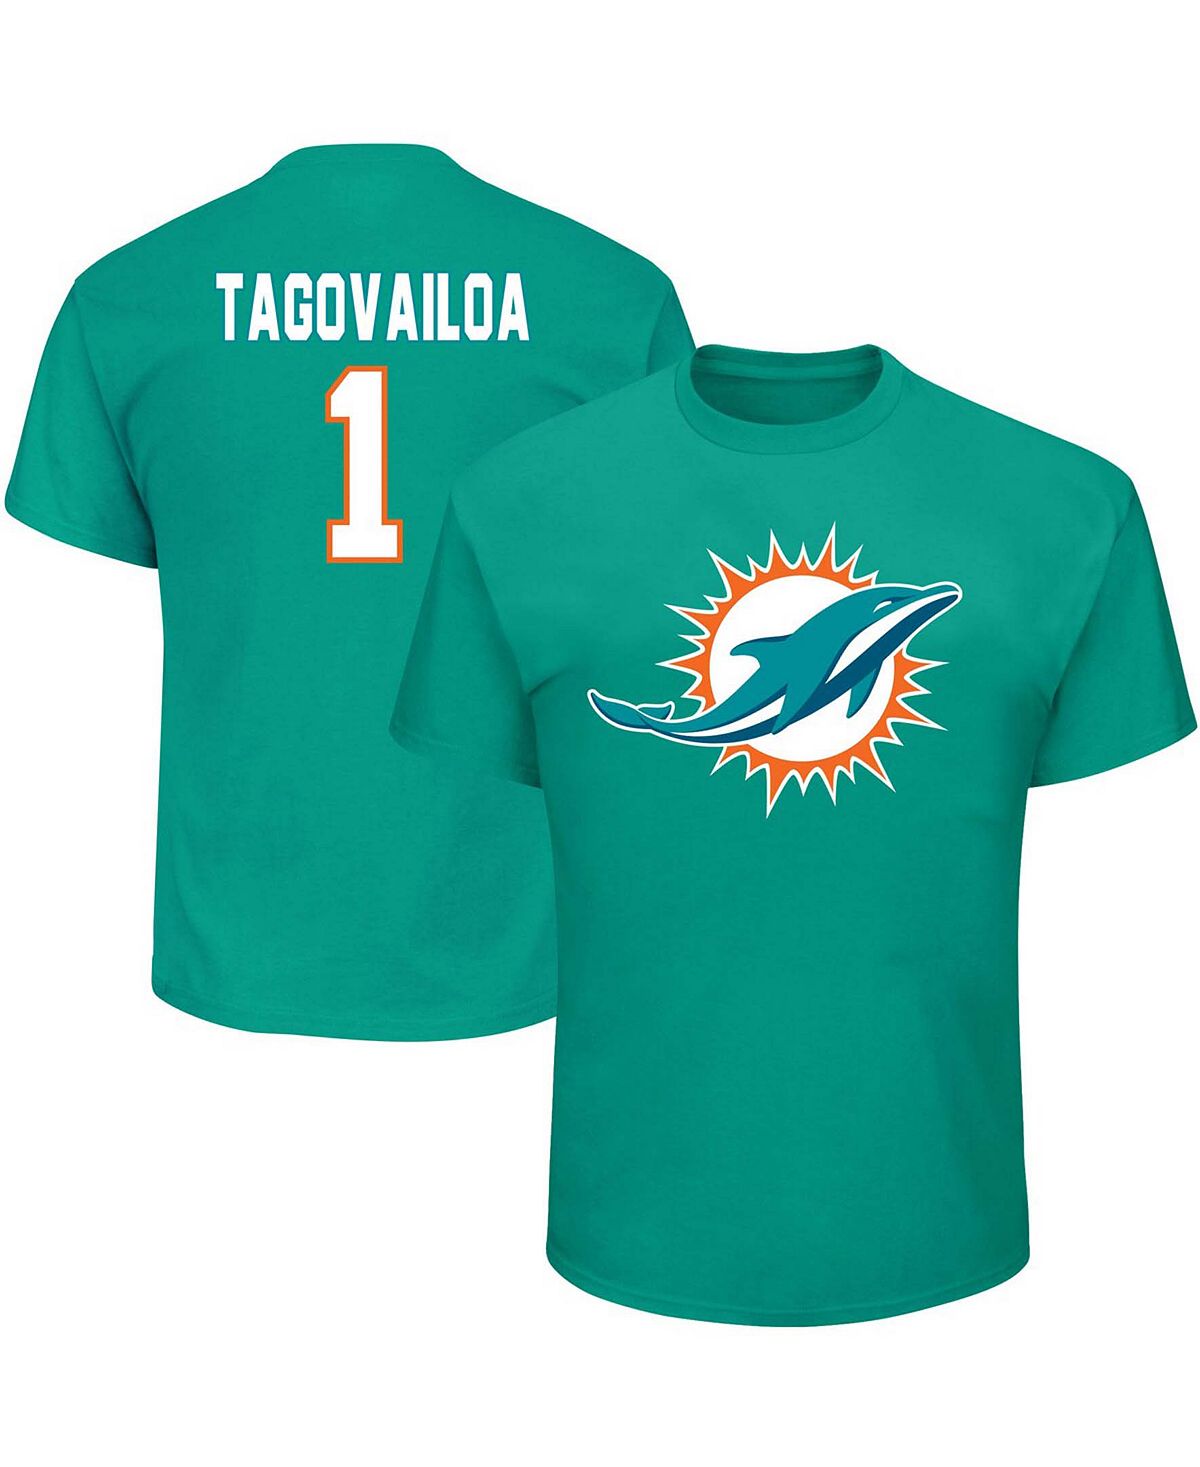 Мужская футболка Big and Tall Tua Tagovailoa Aqua Miami Dolphins, имеющая право на получение получателя Iii, имя, номер Fanatics